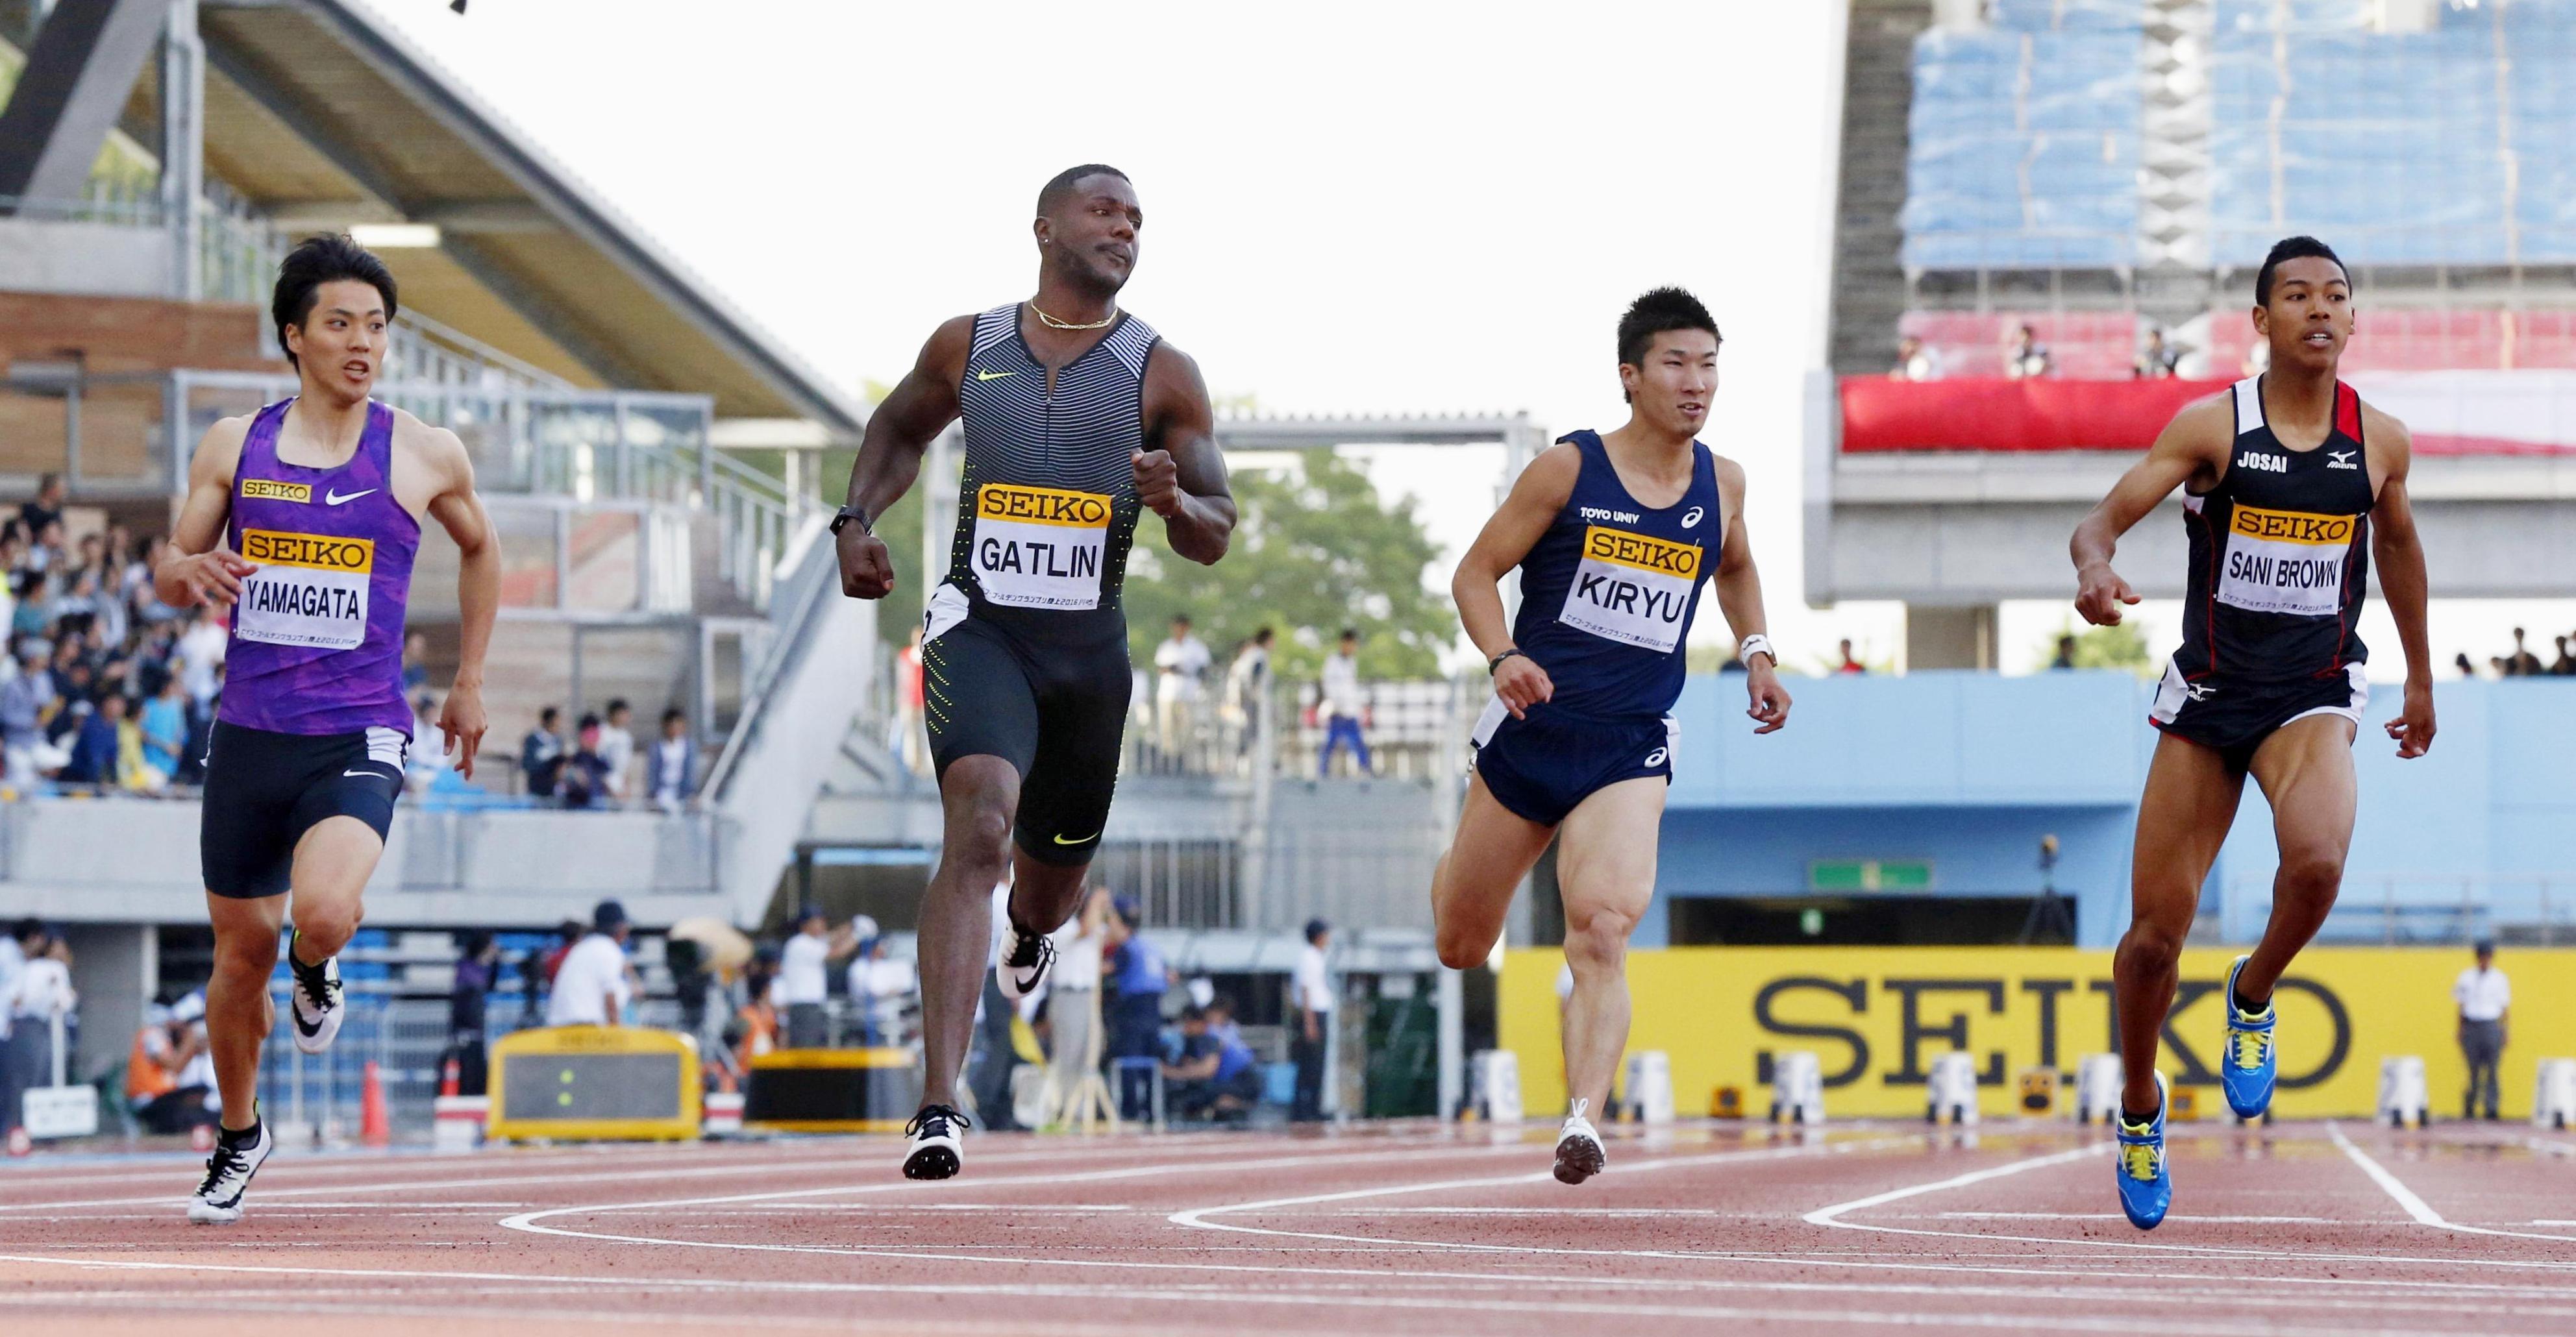 Gatlin keeps focus on Bolt after triumph in Kawasaki | The Japan Times